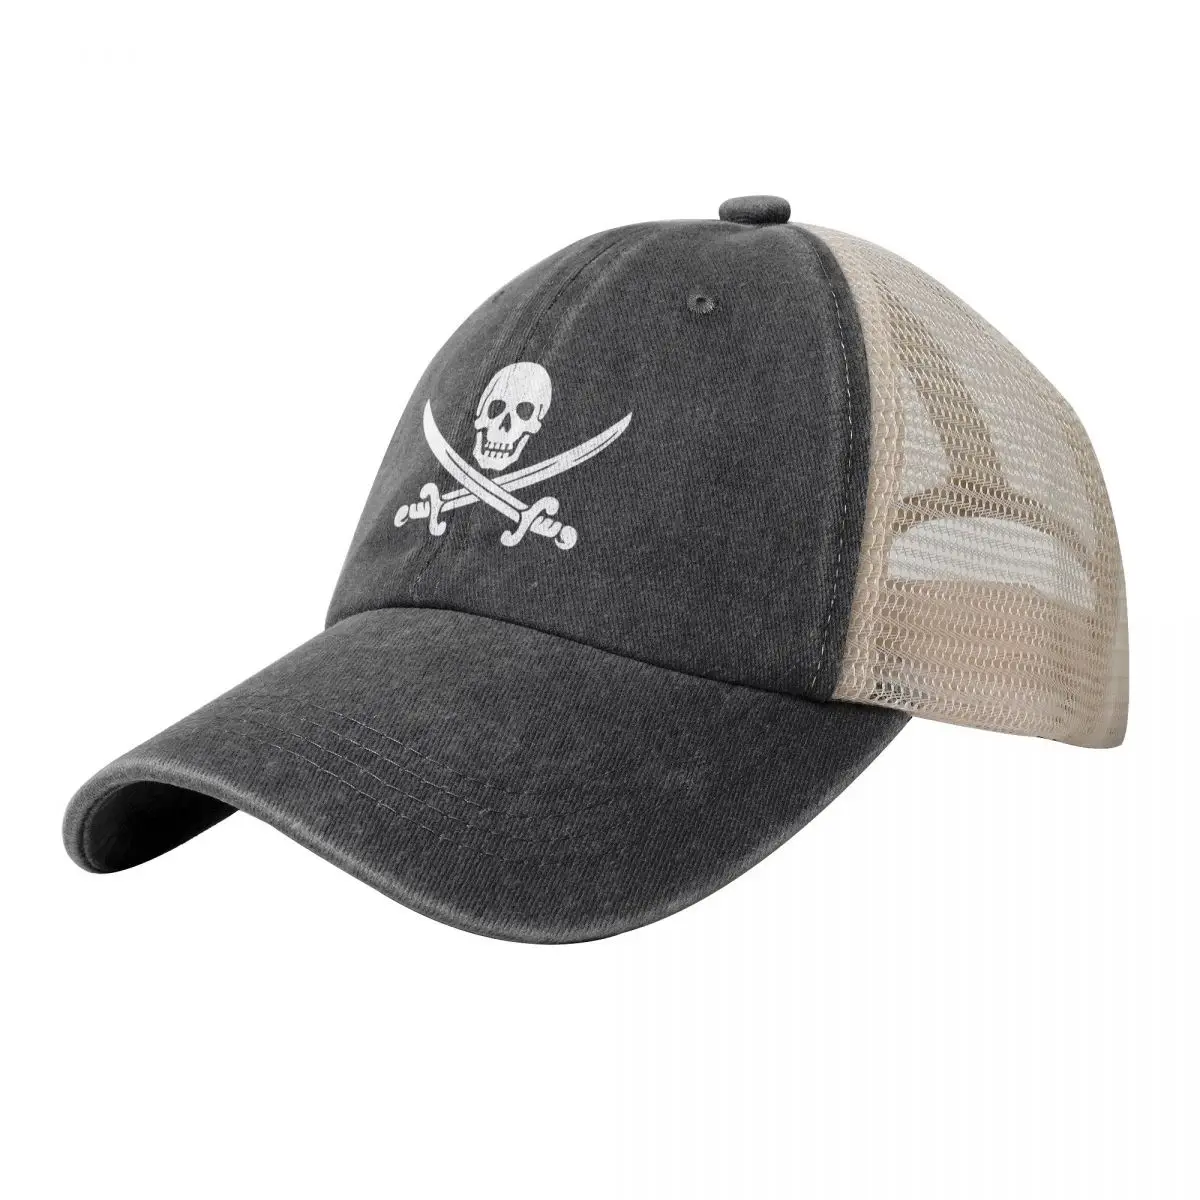 

Pirate Skull Cross Swords Cowboy Mesh Baseball Cap Golf Cap Snapback Cap Golf Wear Sunhat Hats Woman Men's